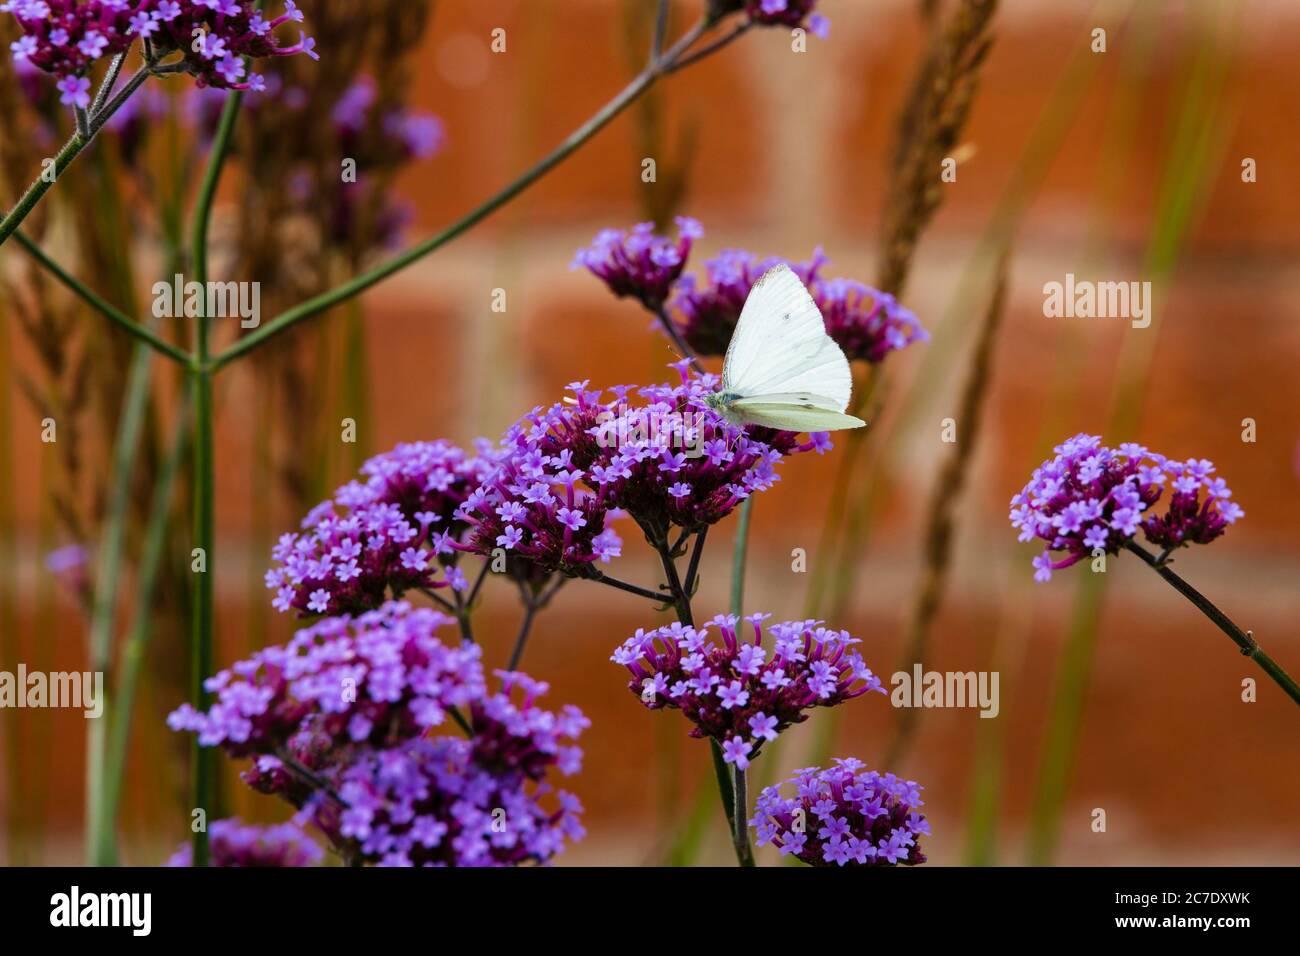 Small White butterfly, Pieris Rapae, feeding on purple Valerian flower plant. Stock Photo